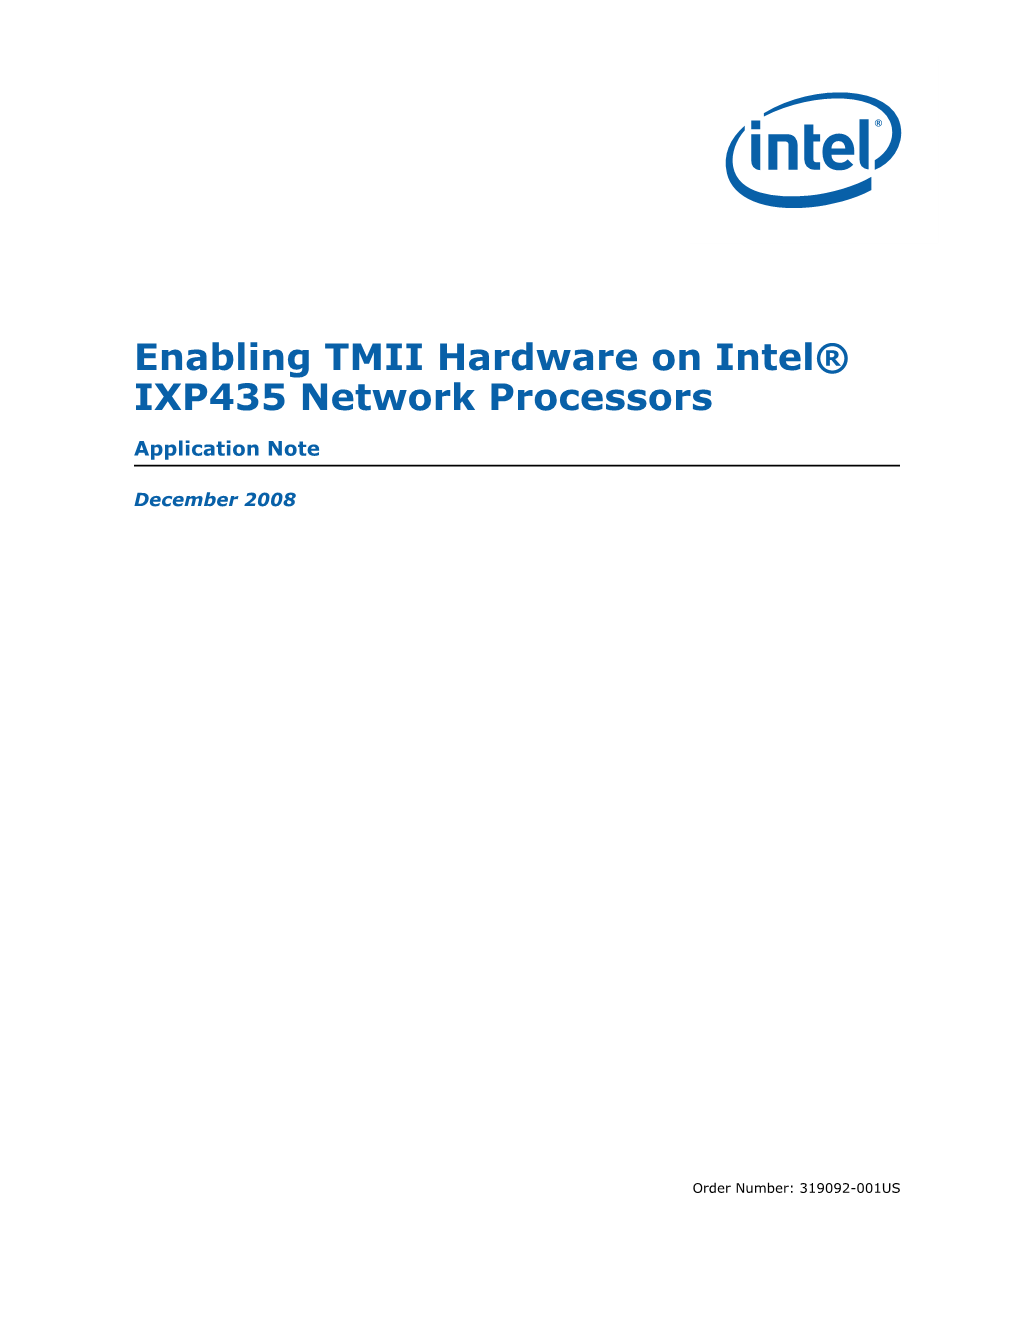 Enabling TMII Hardware on Intel IXP435 Network Processors